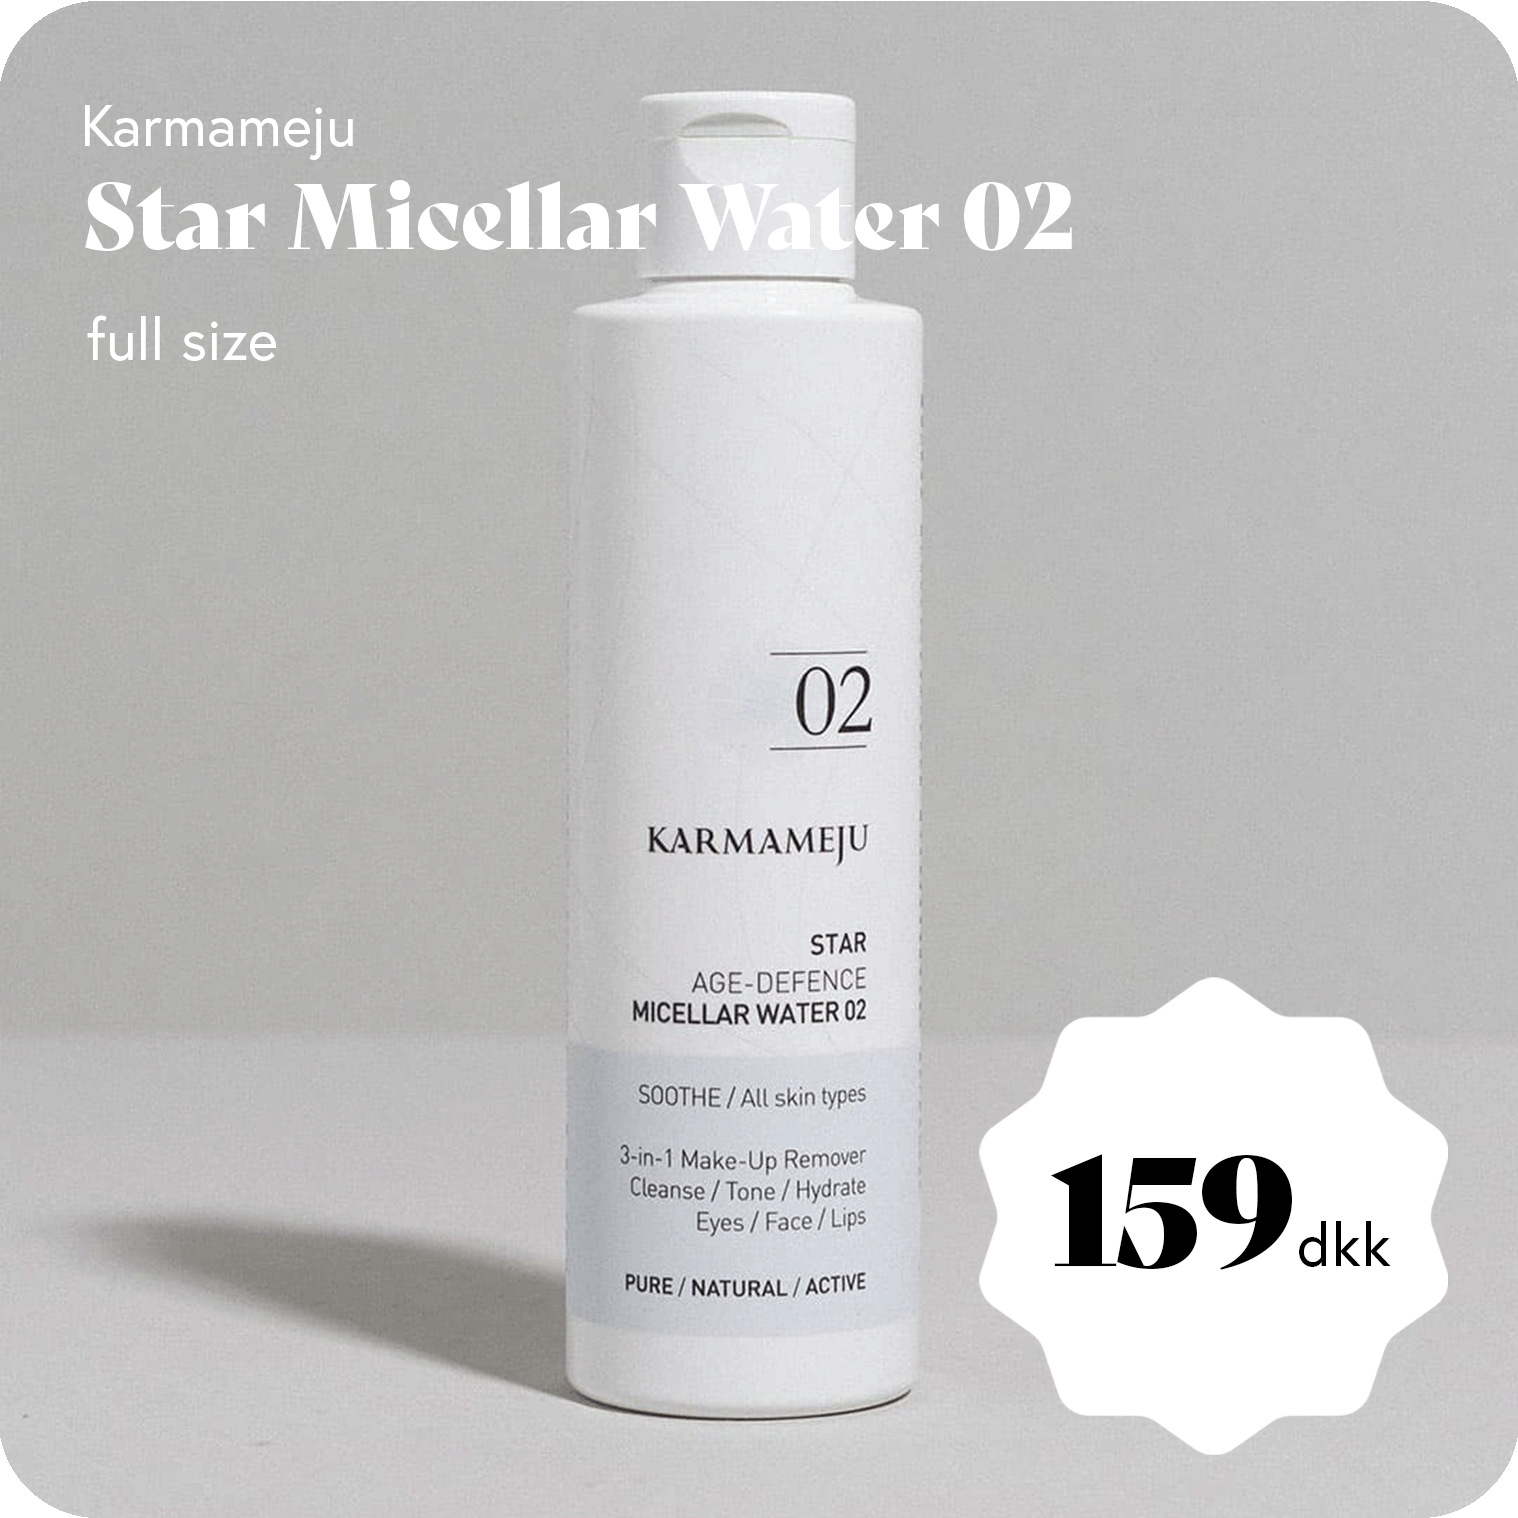 Star Micellar Water 02